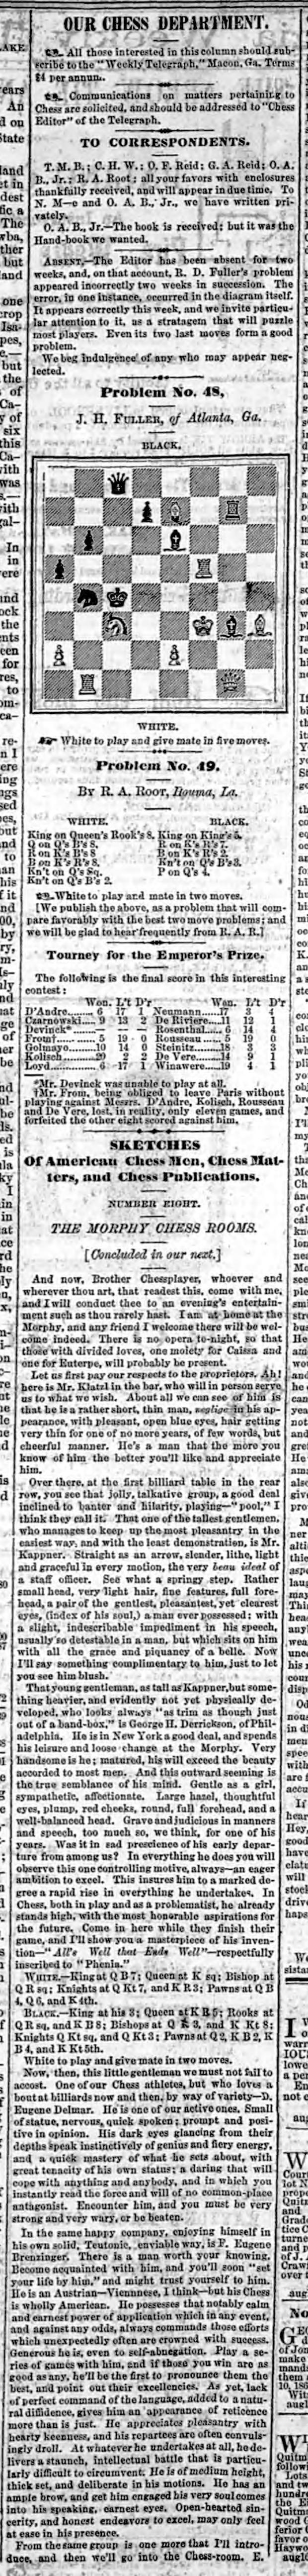 1867.08.16-01 Macon Georgia Weekly Telegraph.jpg